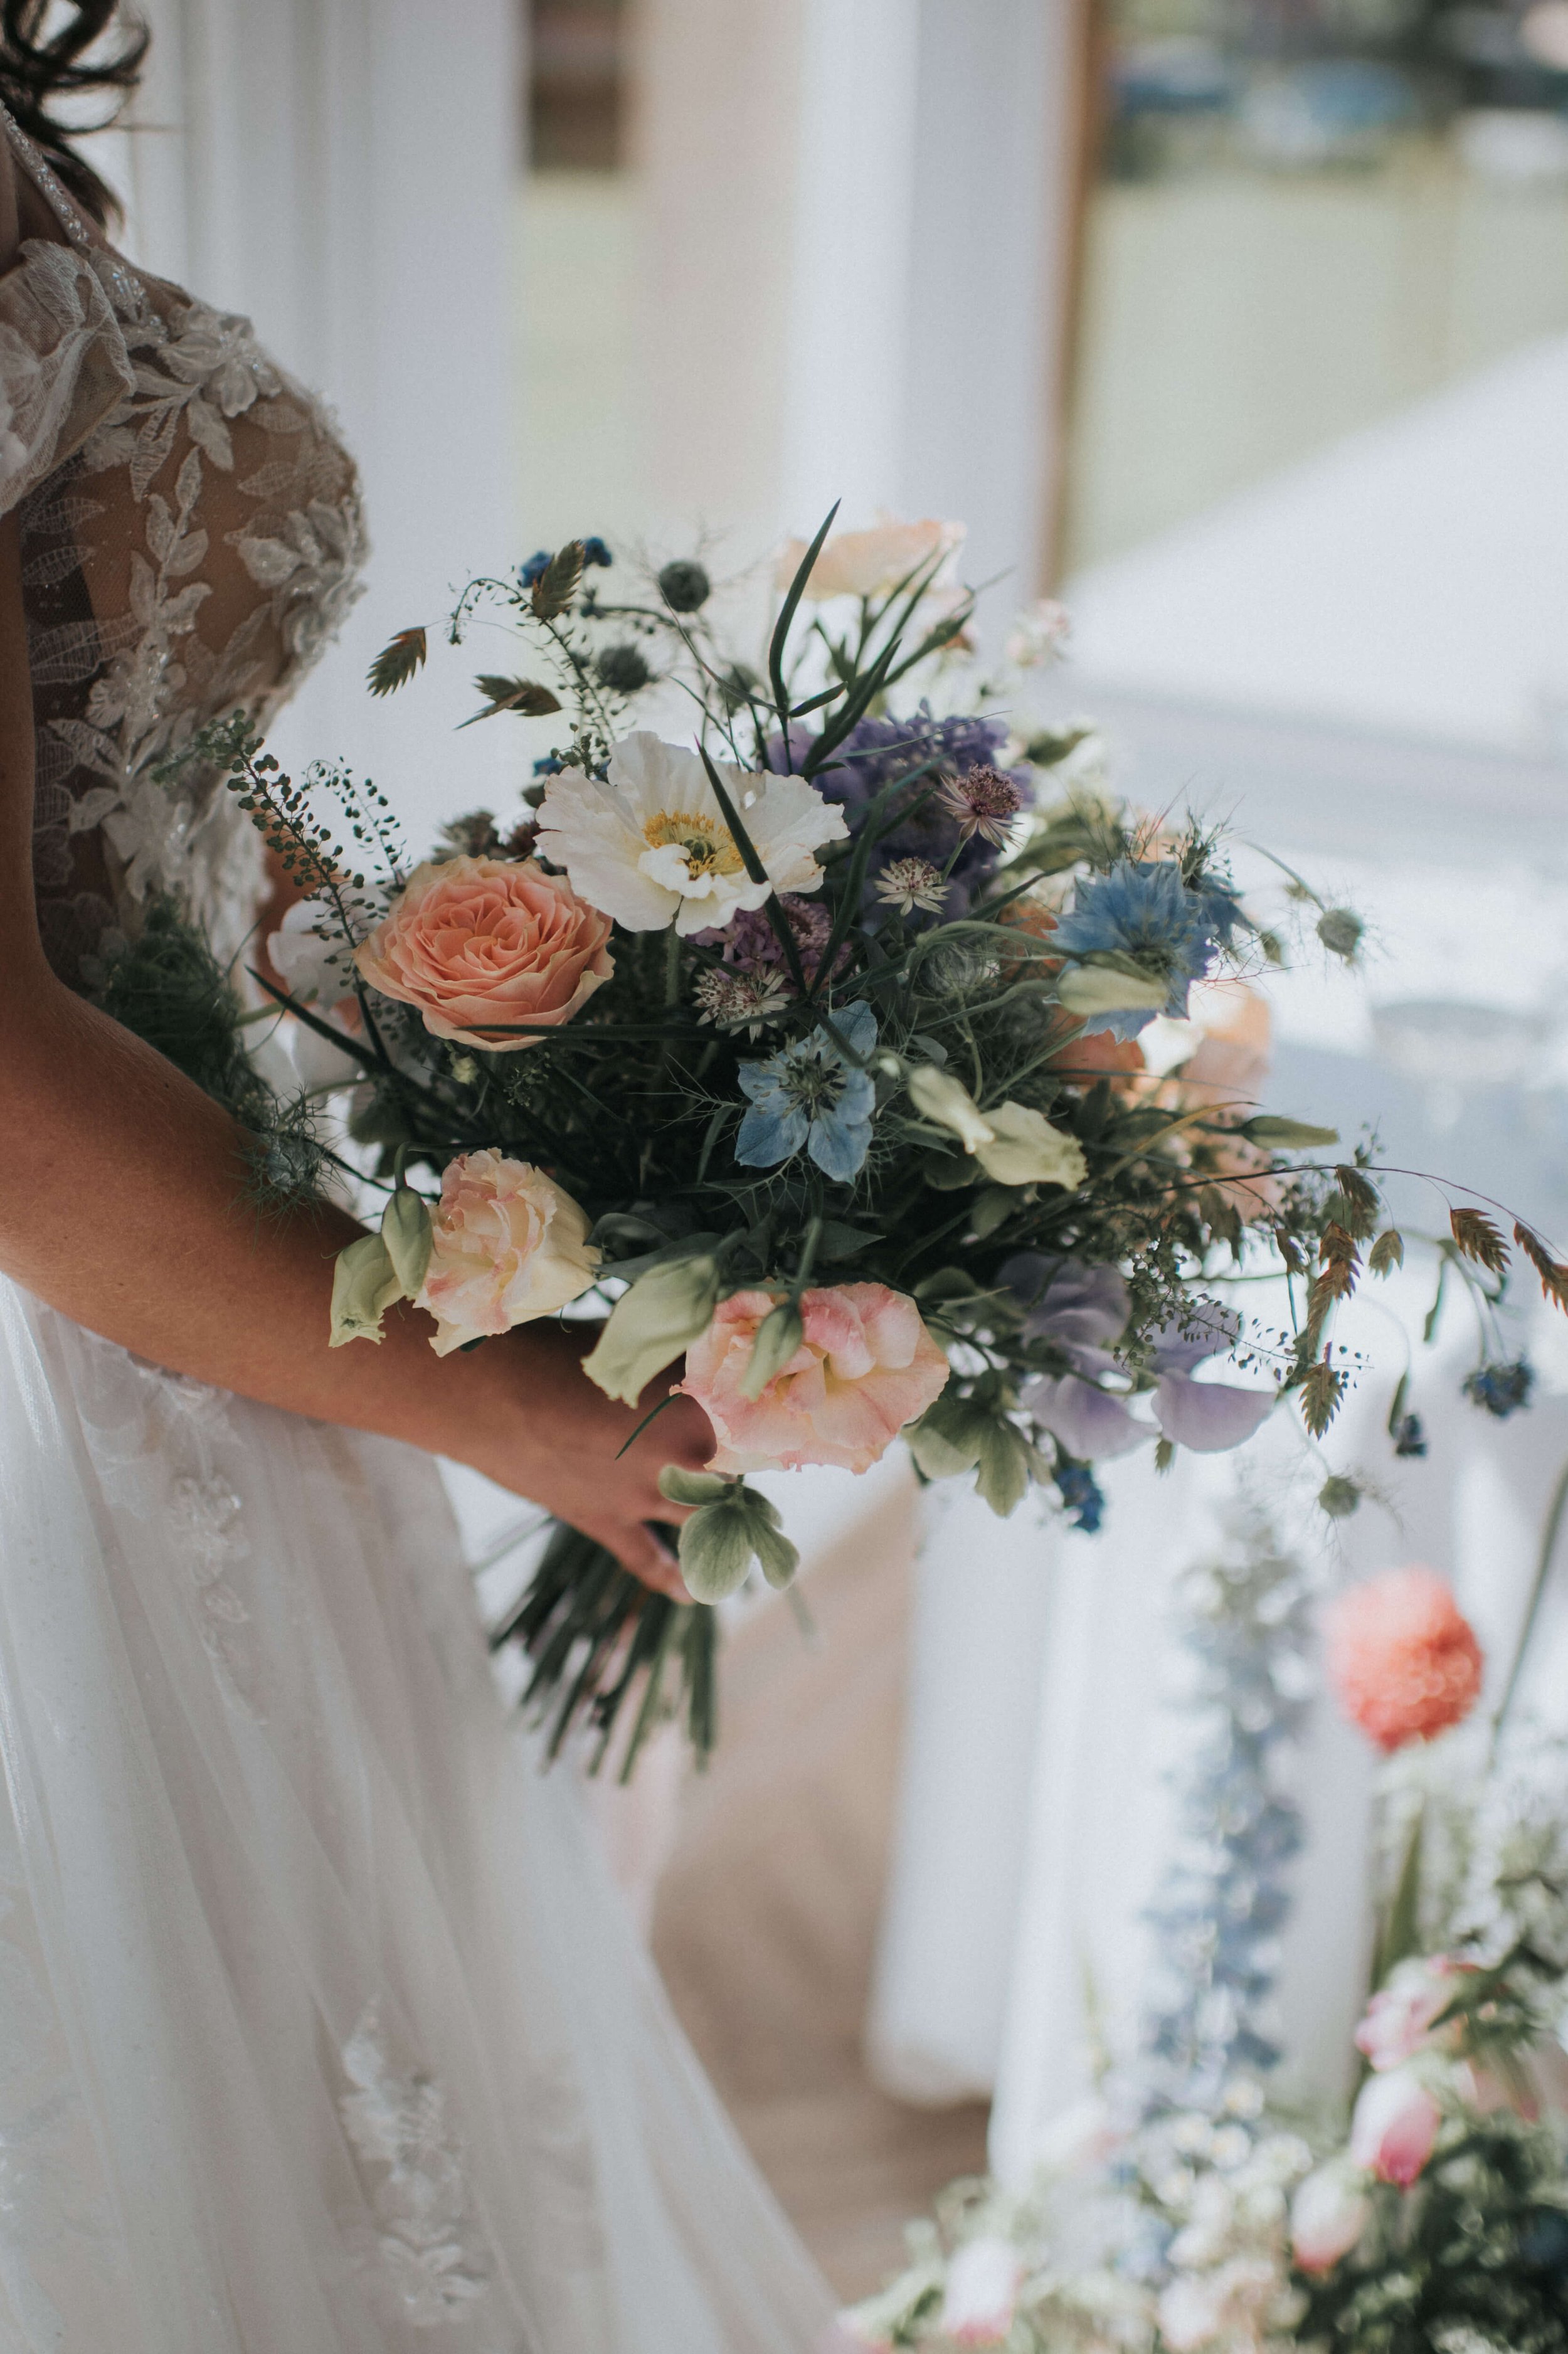 Alberts-Standish-Wedding-Colourful-Flowers-Bouquet7.jpg